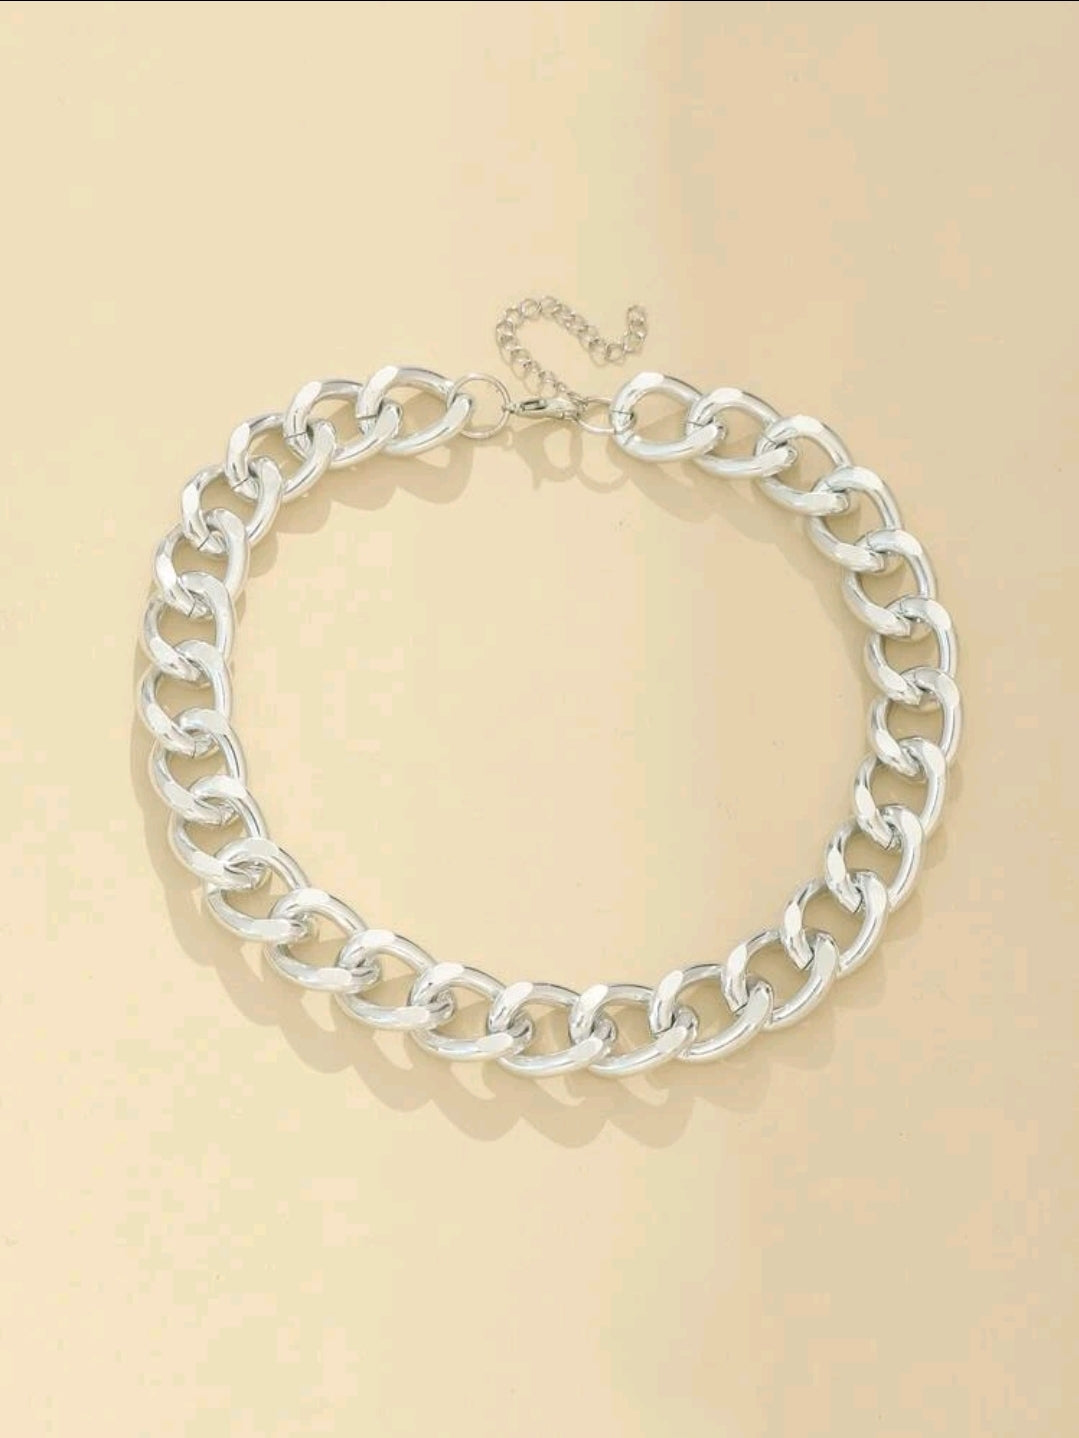 Minimalist Chain Necklace